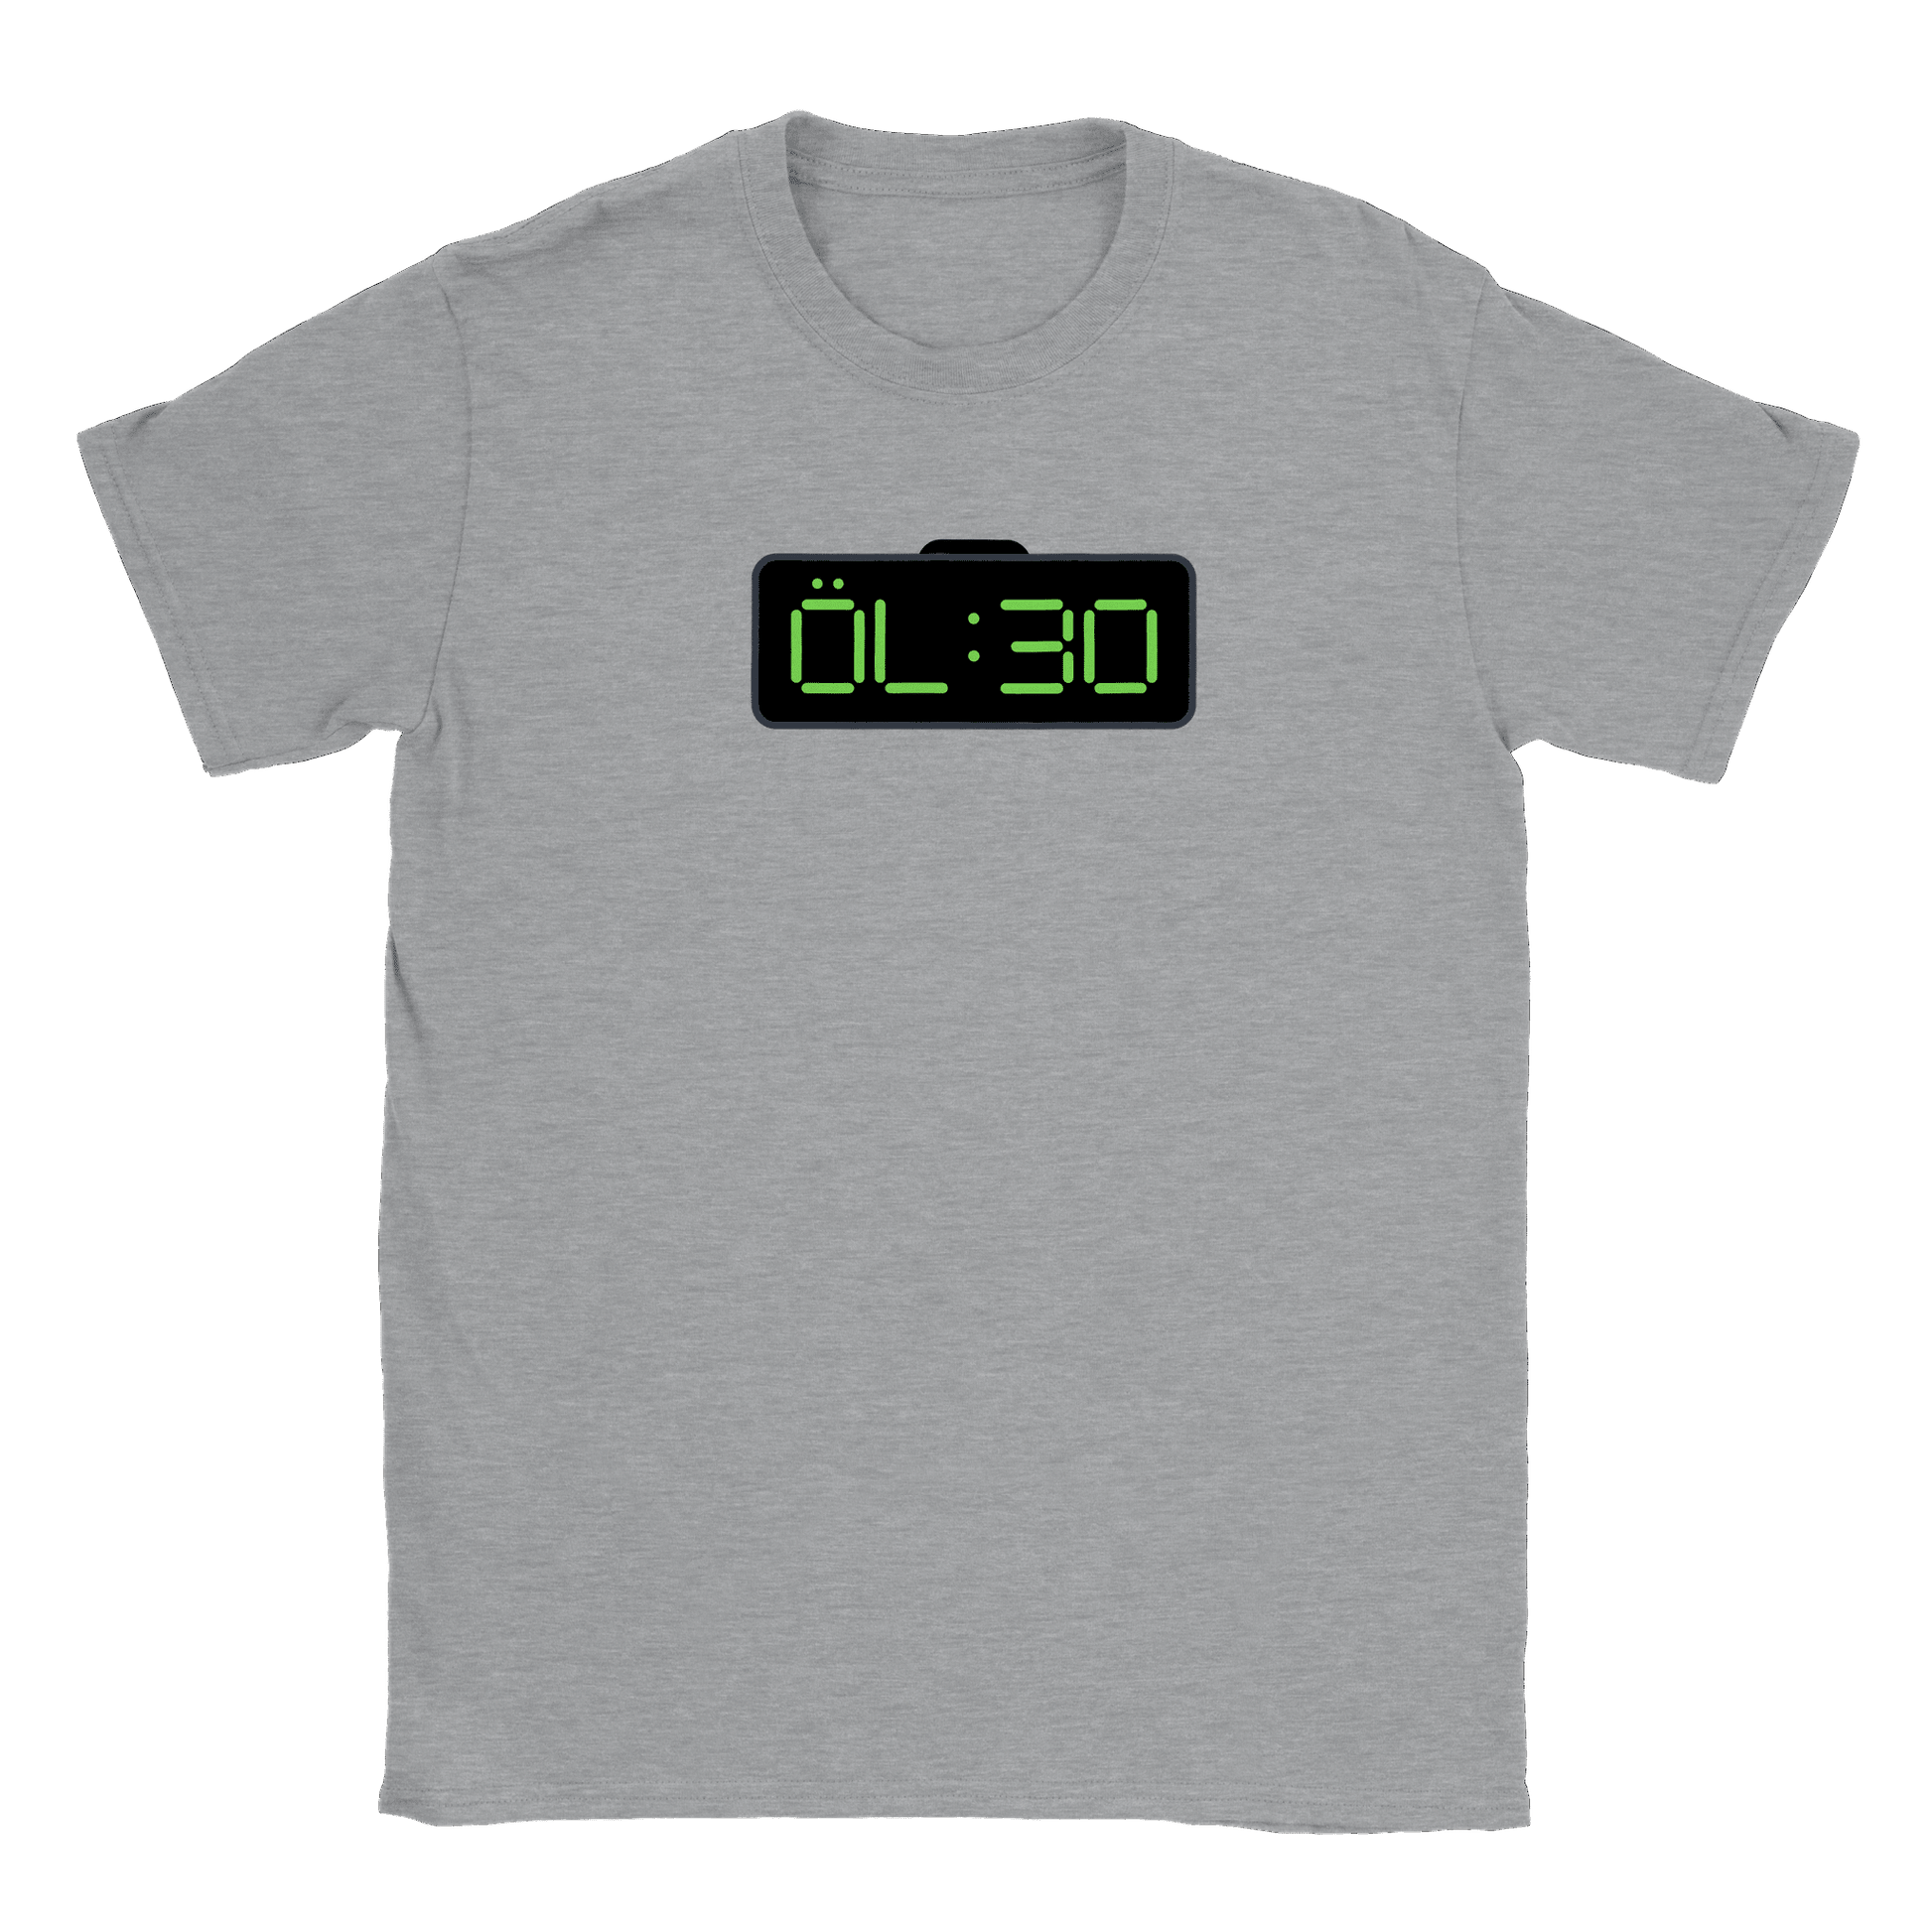 ÖL 30 - T-shirt Sports Grey